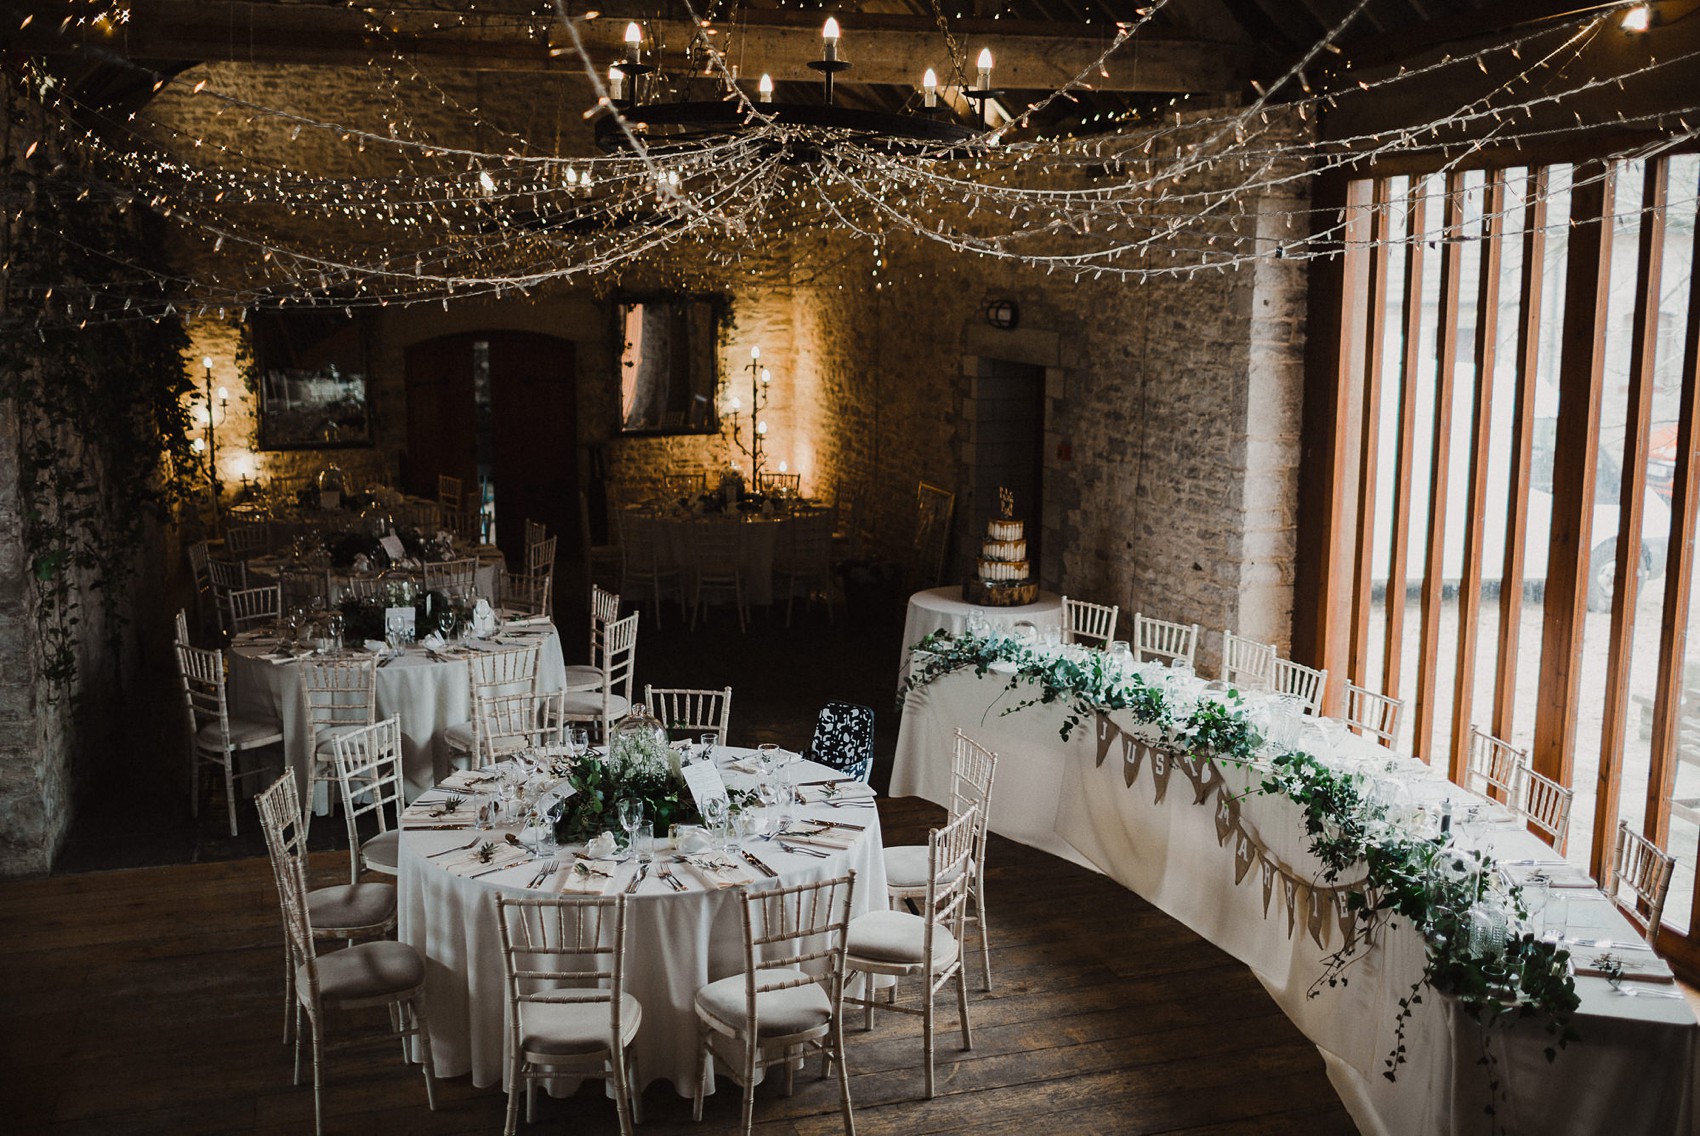  Romantic winter barn wedding - An Italian Inspired Winter Barn Wedding in Dorset, in Shades of Green and White